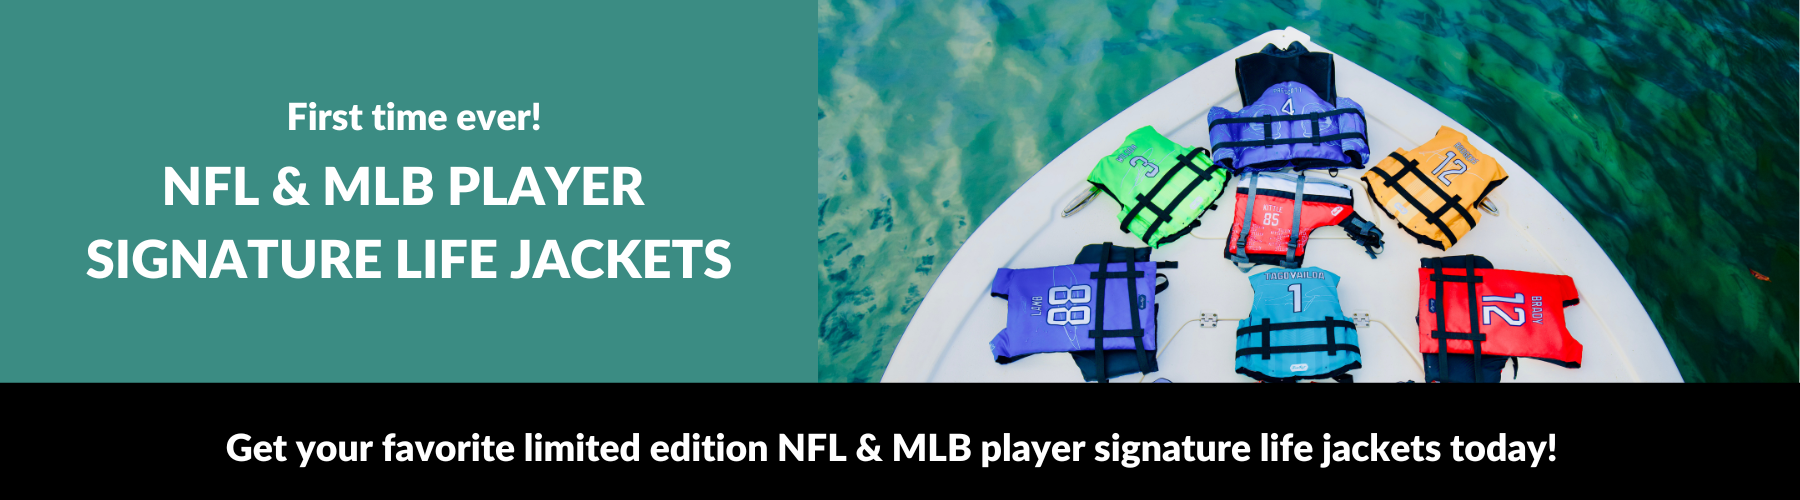 NFL & MLB Player Signature Life Jackets